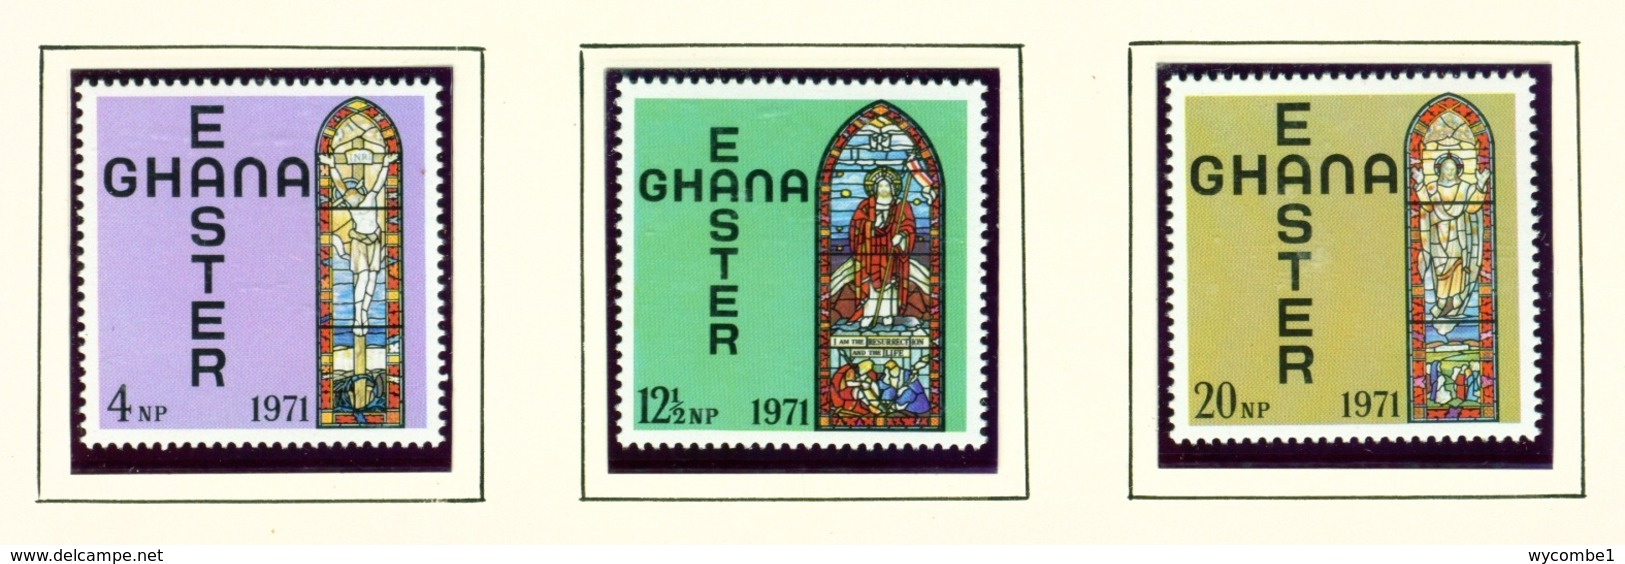 GHANA  -  1971 Easter Set Unmounted/Never Hinged Mint - Ghana (1957-...)